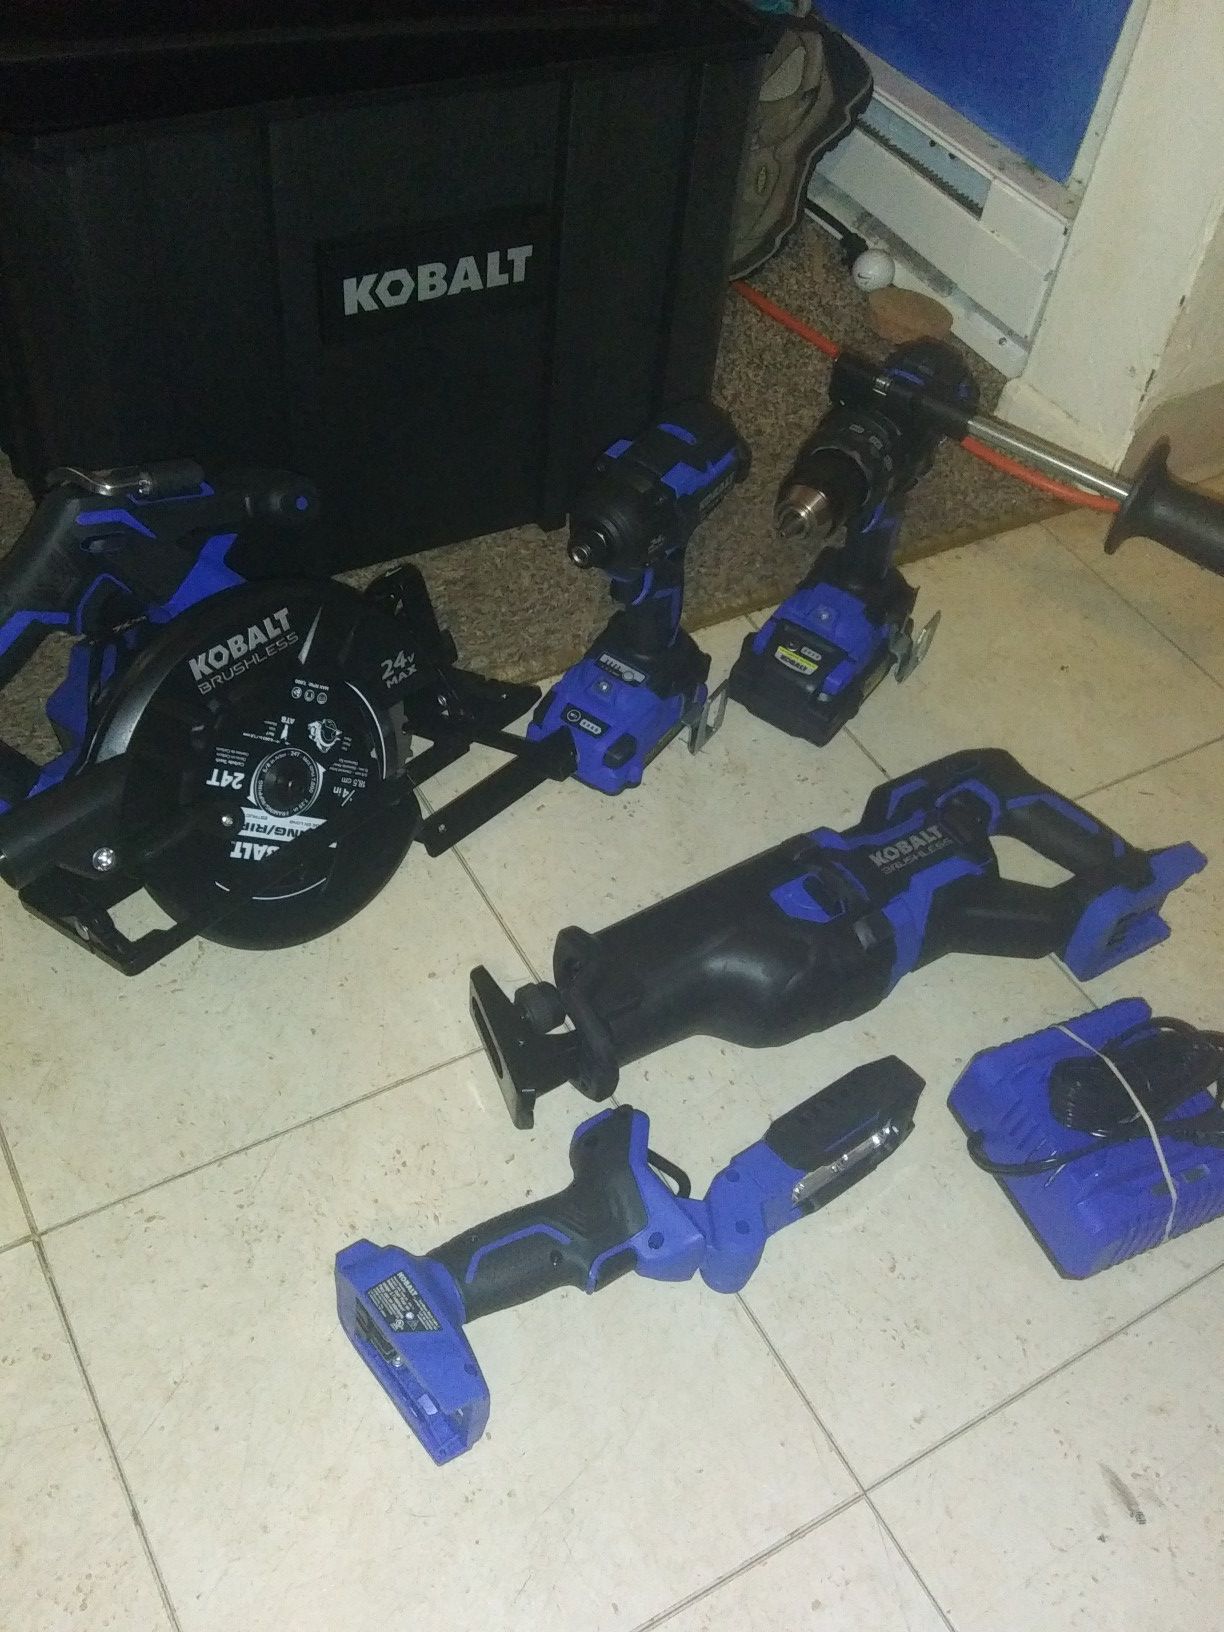 Kobalt 24v power tool set with carrying case.